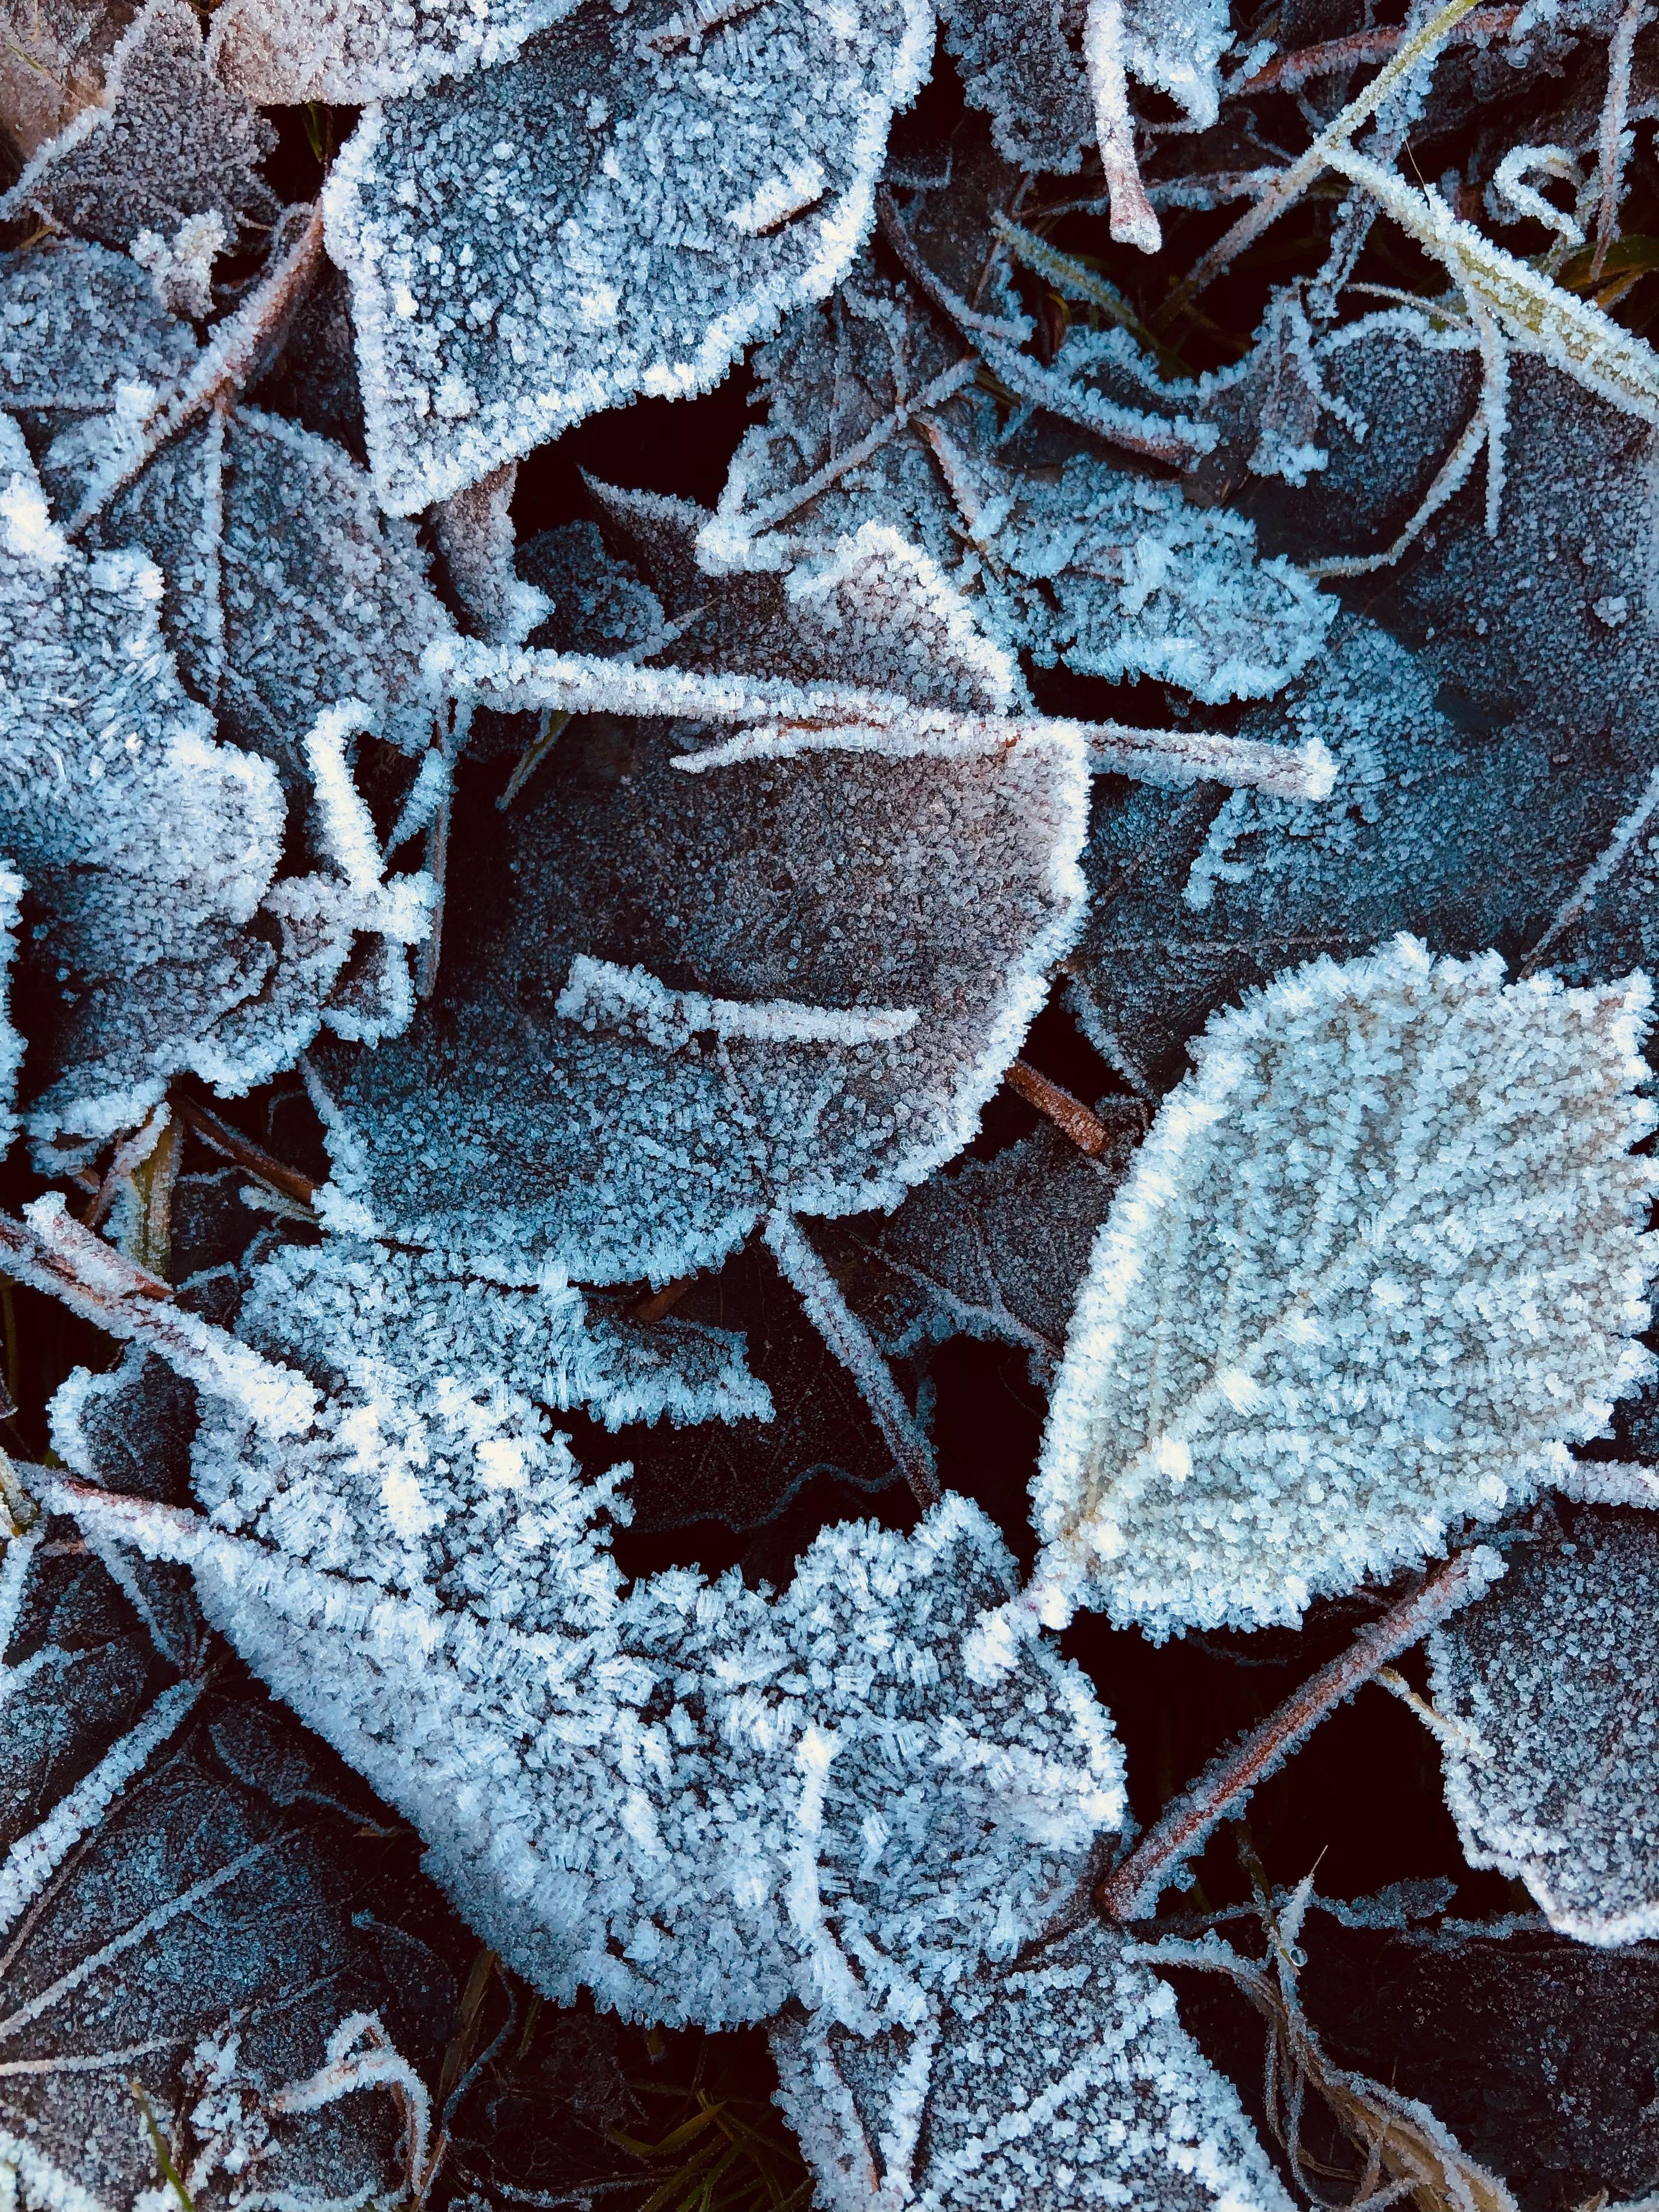 Frozen.
#winterdetails #nature #babyitscoldoutside